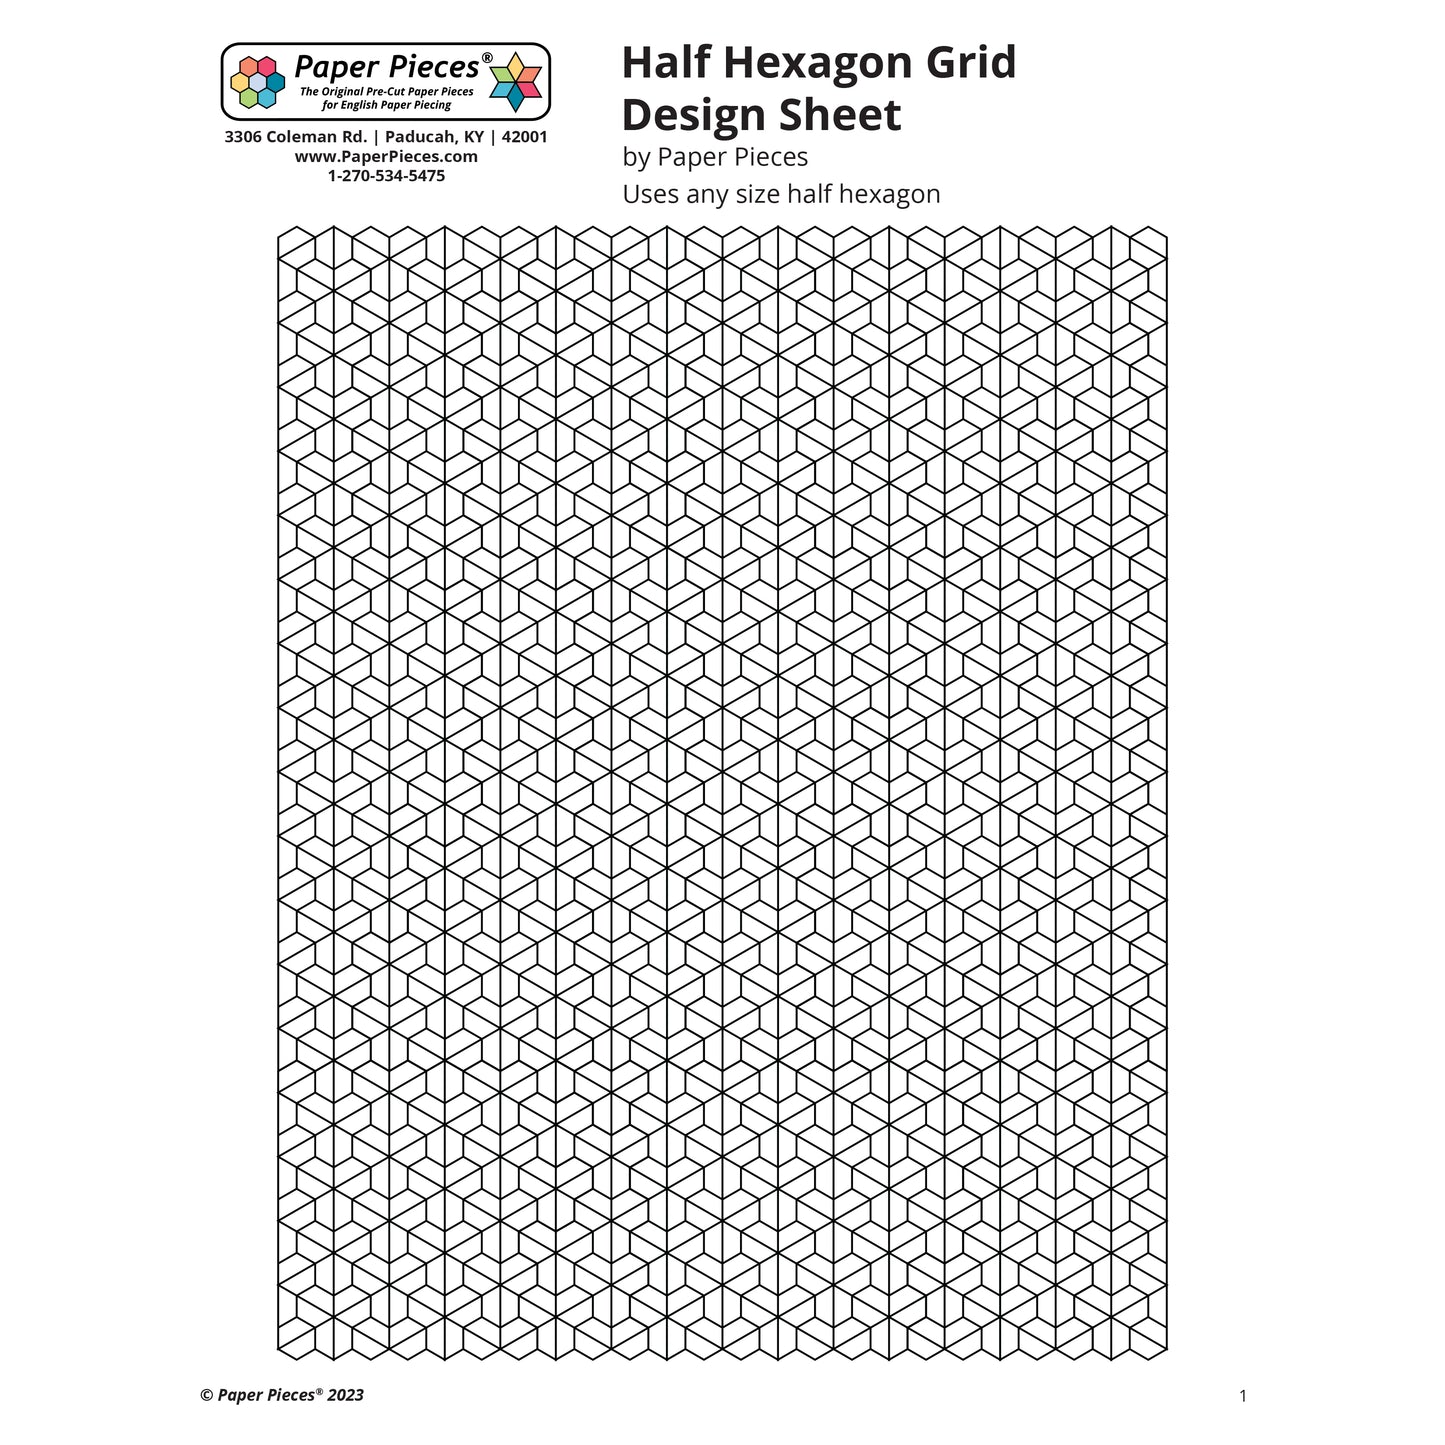 Half Hexagon Grid Design Sheet (Free PDF Downlad)